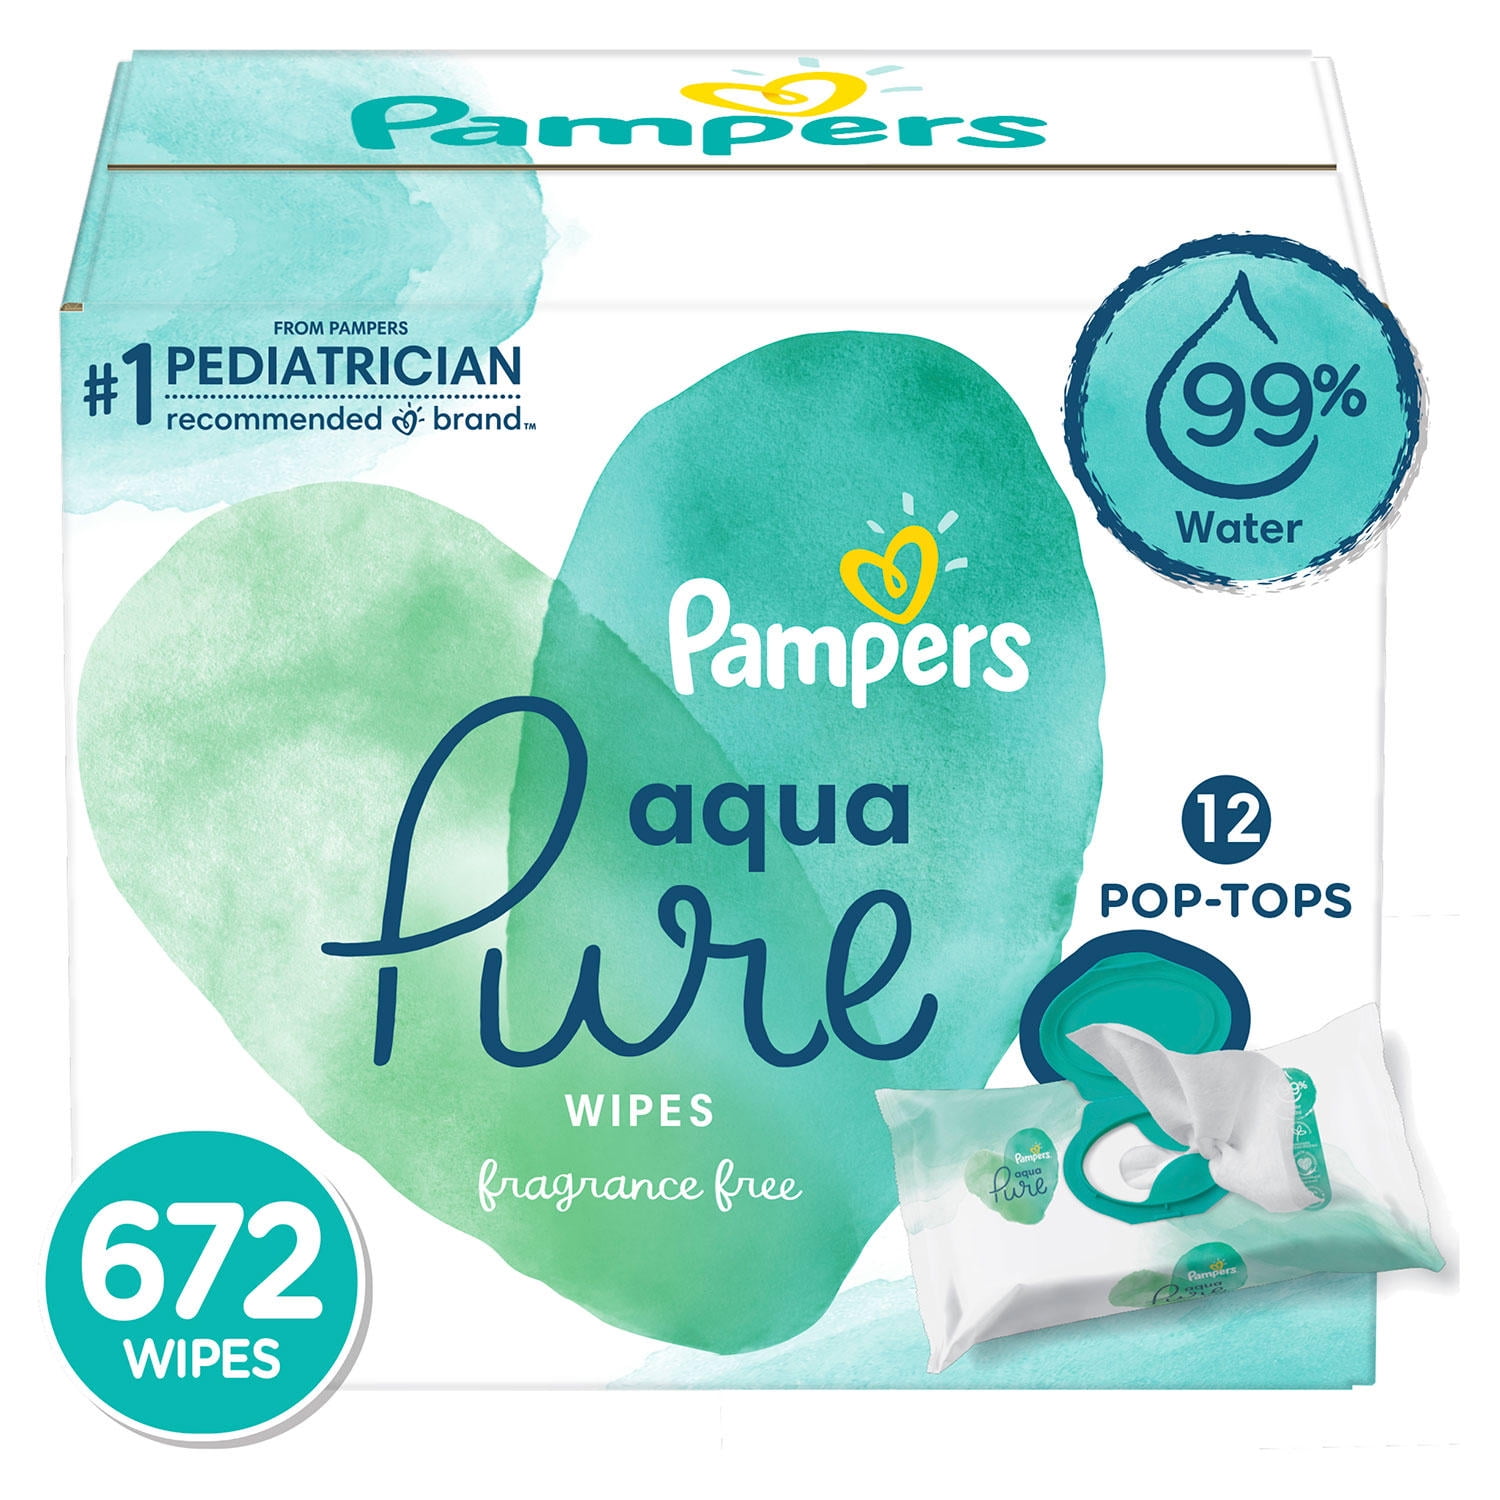 Pampers Aqua Pure Sensitive Baby Wipes 12x Pop-Top 672 Count